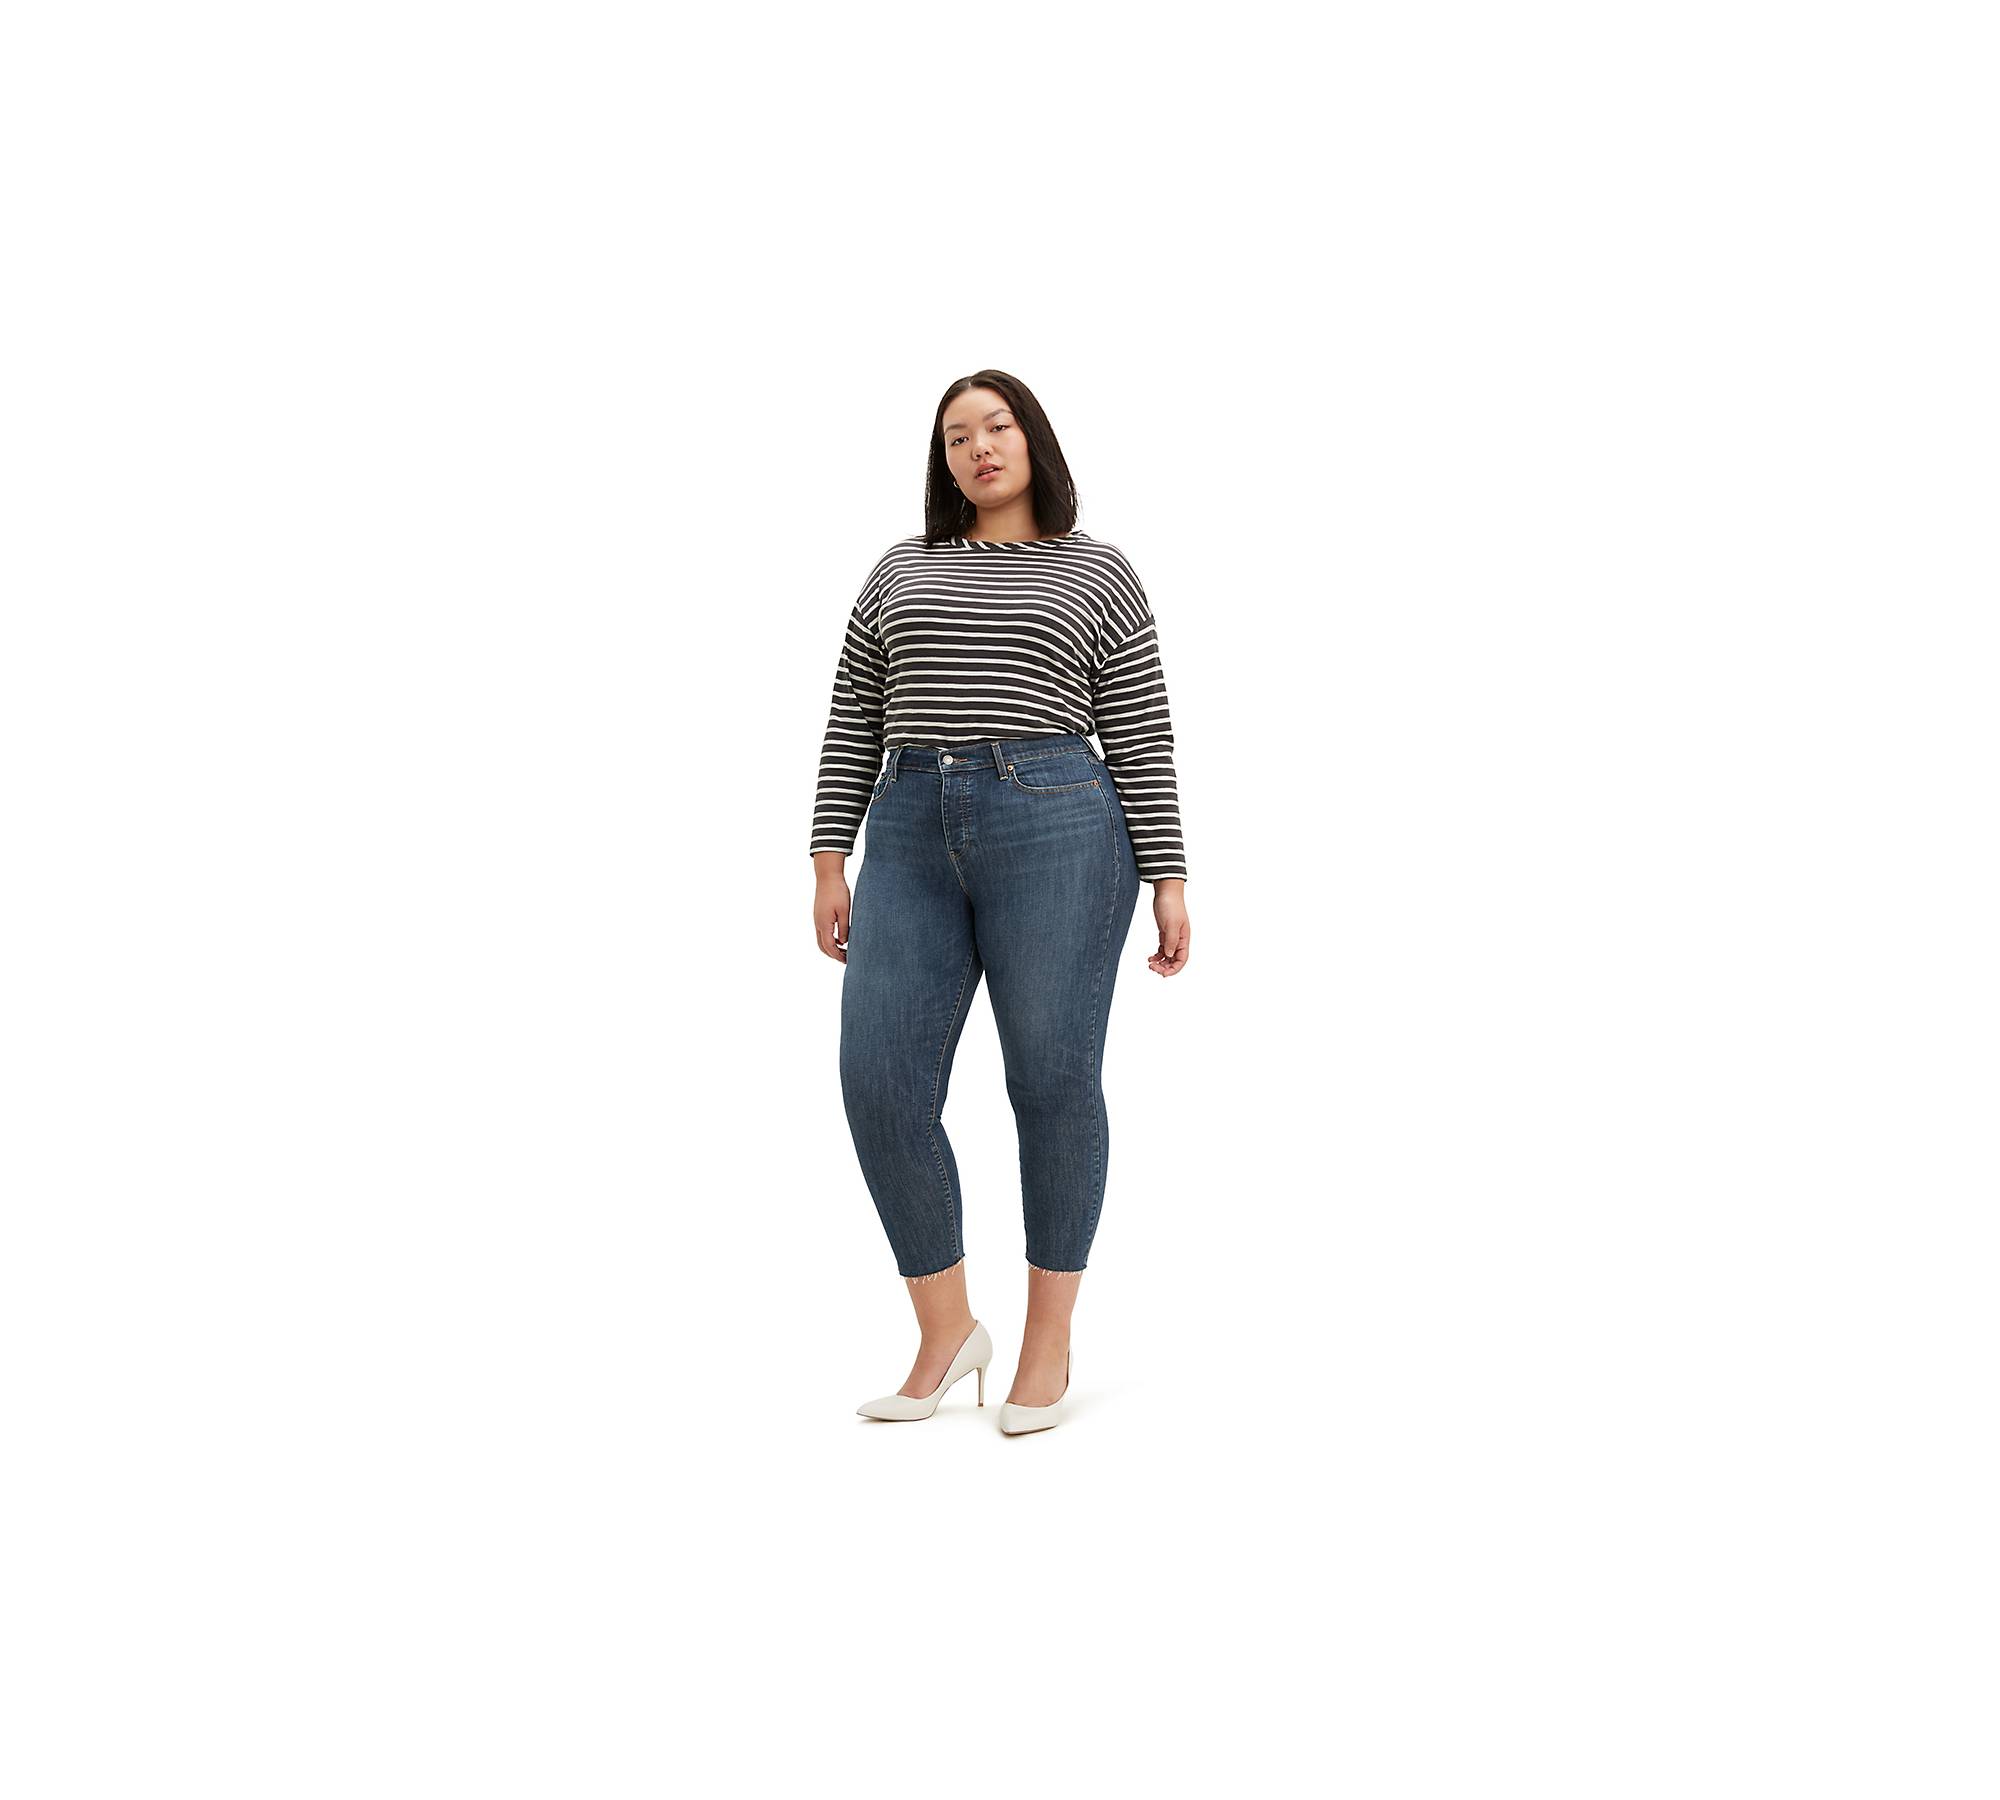 Wedgie Fit Women's Jeans (Plus Size) 1